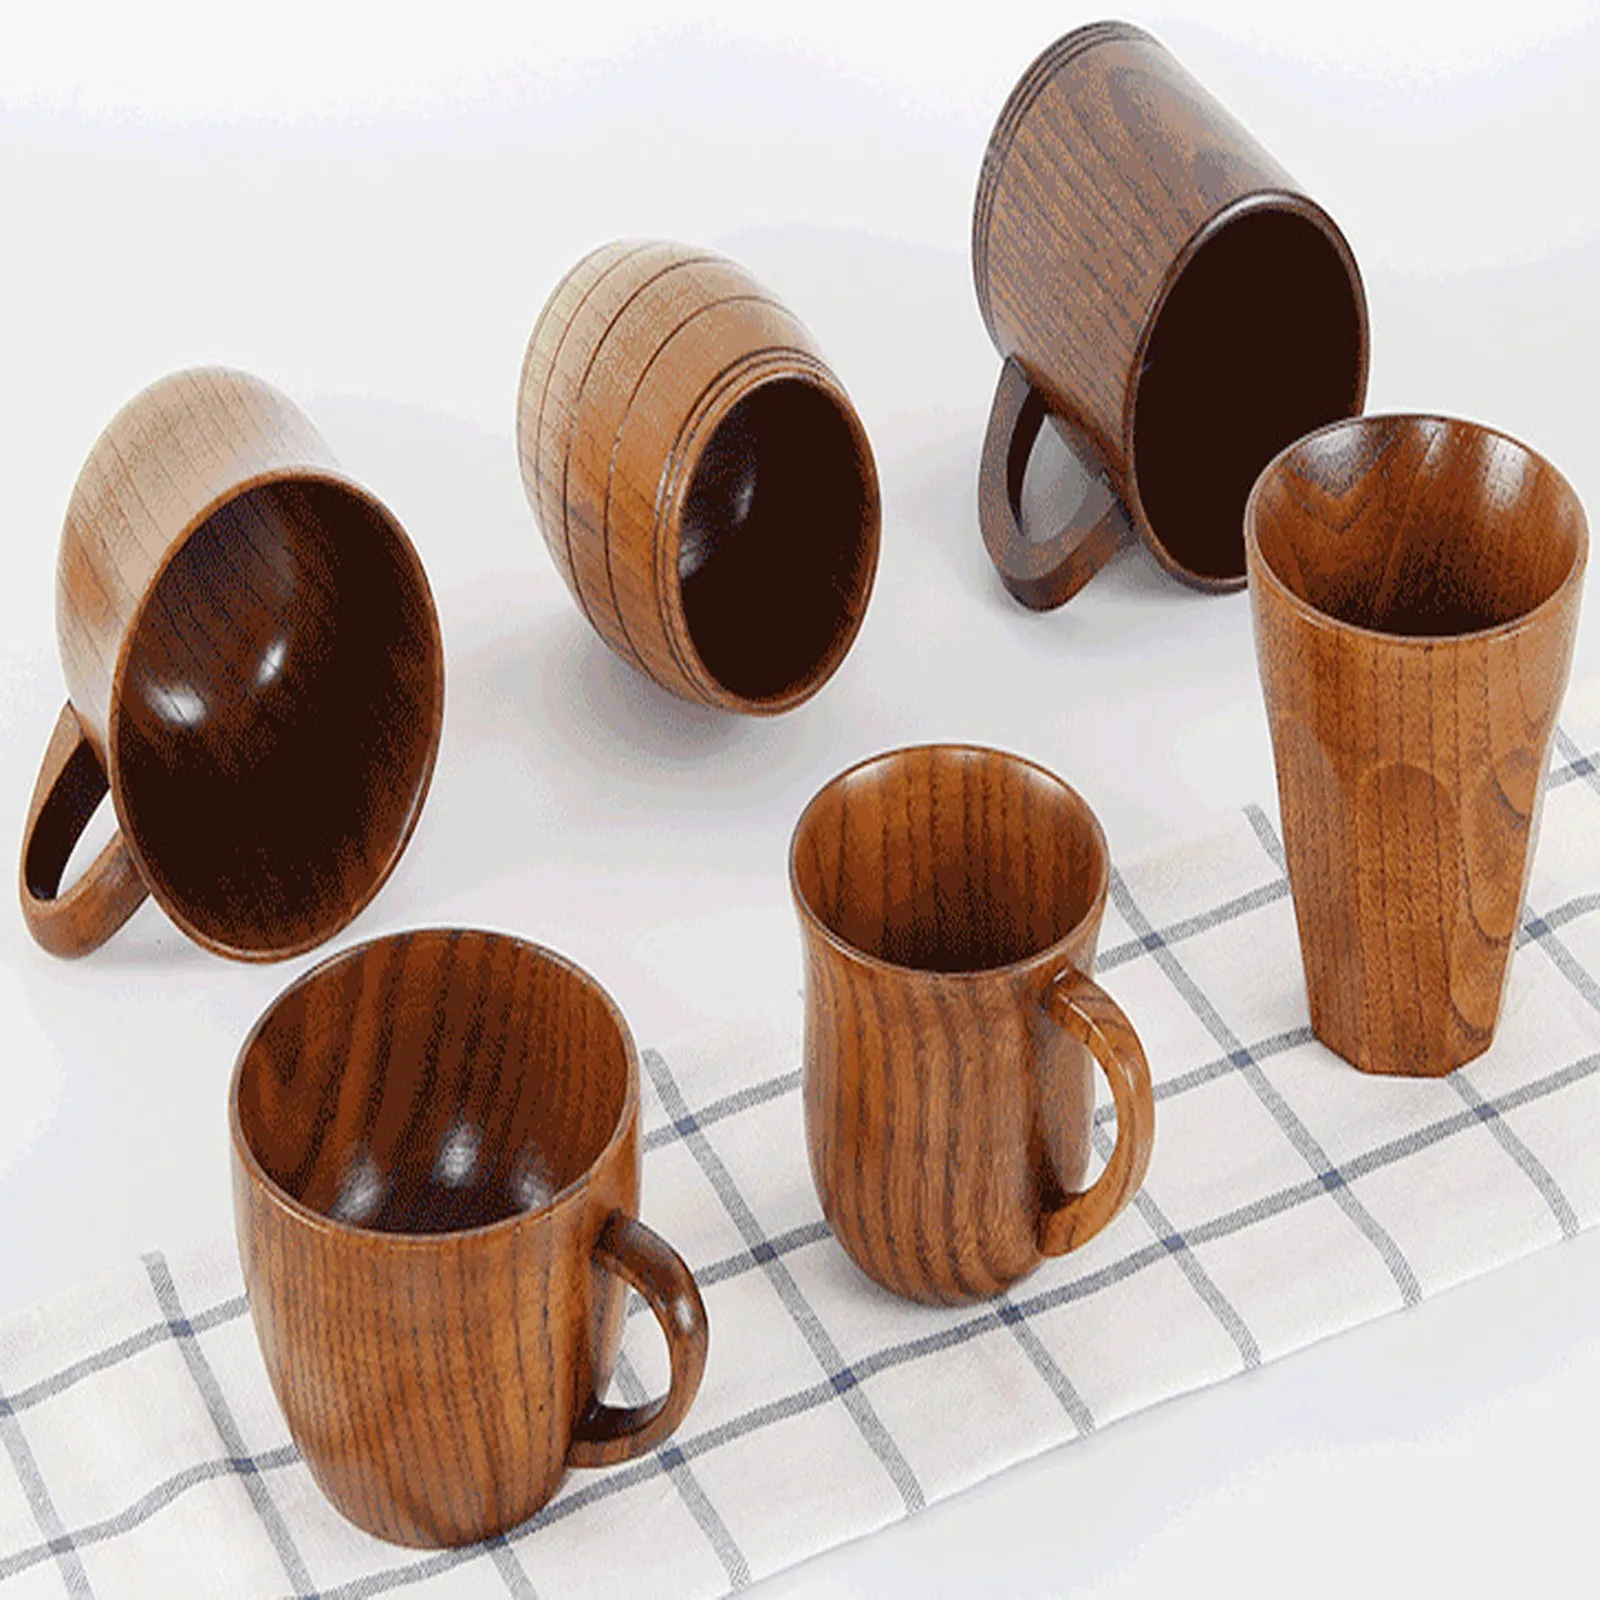 https://ae01.alicdn.com/kf/Sb55a8bed0a1f46a4b9a0595d3e2de318M/Natural-Jujube-Wood-Cup-Handmade-Retro-Wooden-Drinking-Mug-Classic-Milk-Coffee-Beer-Tea-Cups-Kitchen.jpg